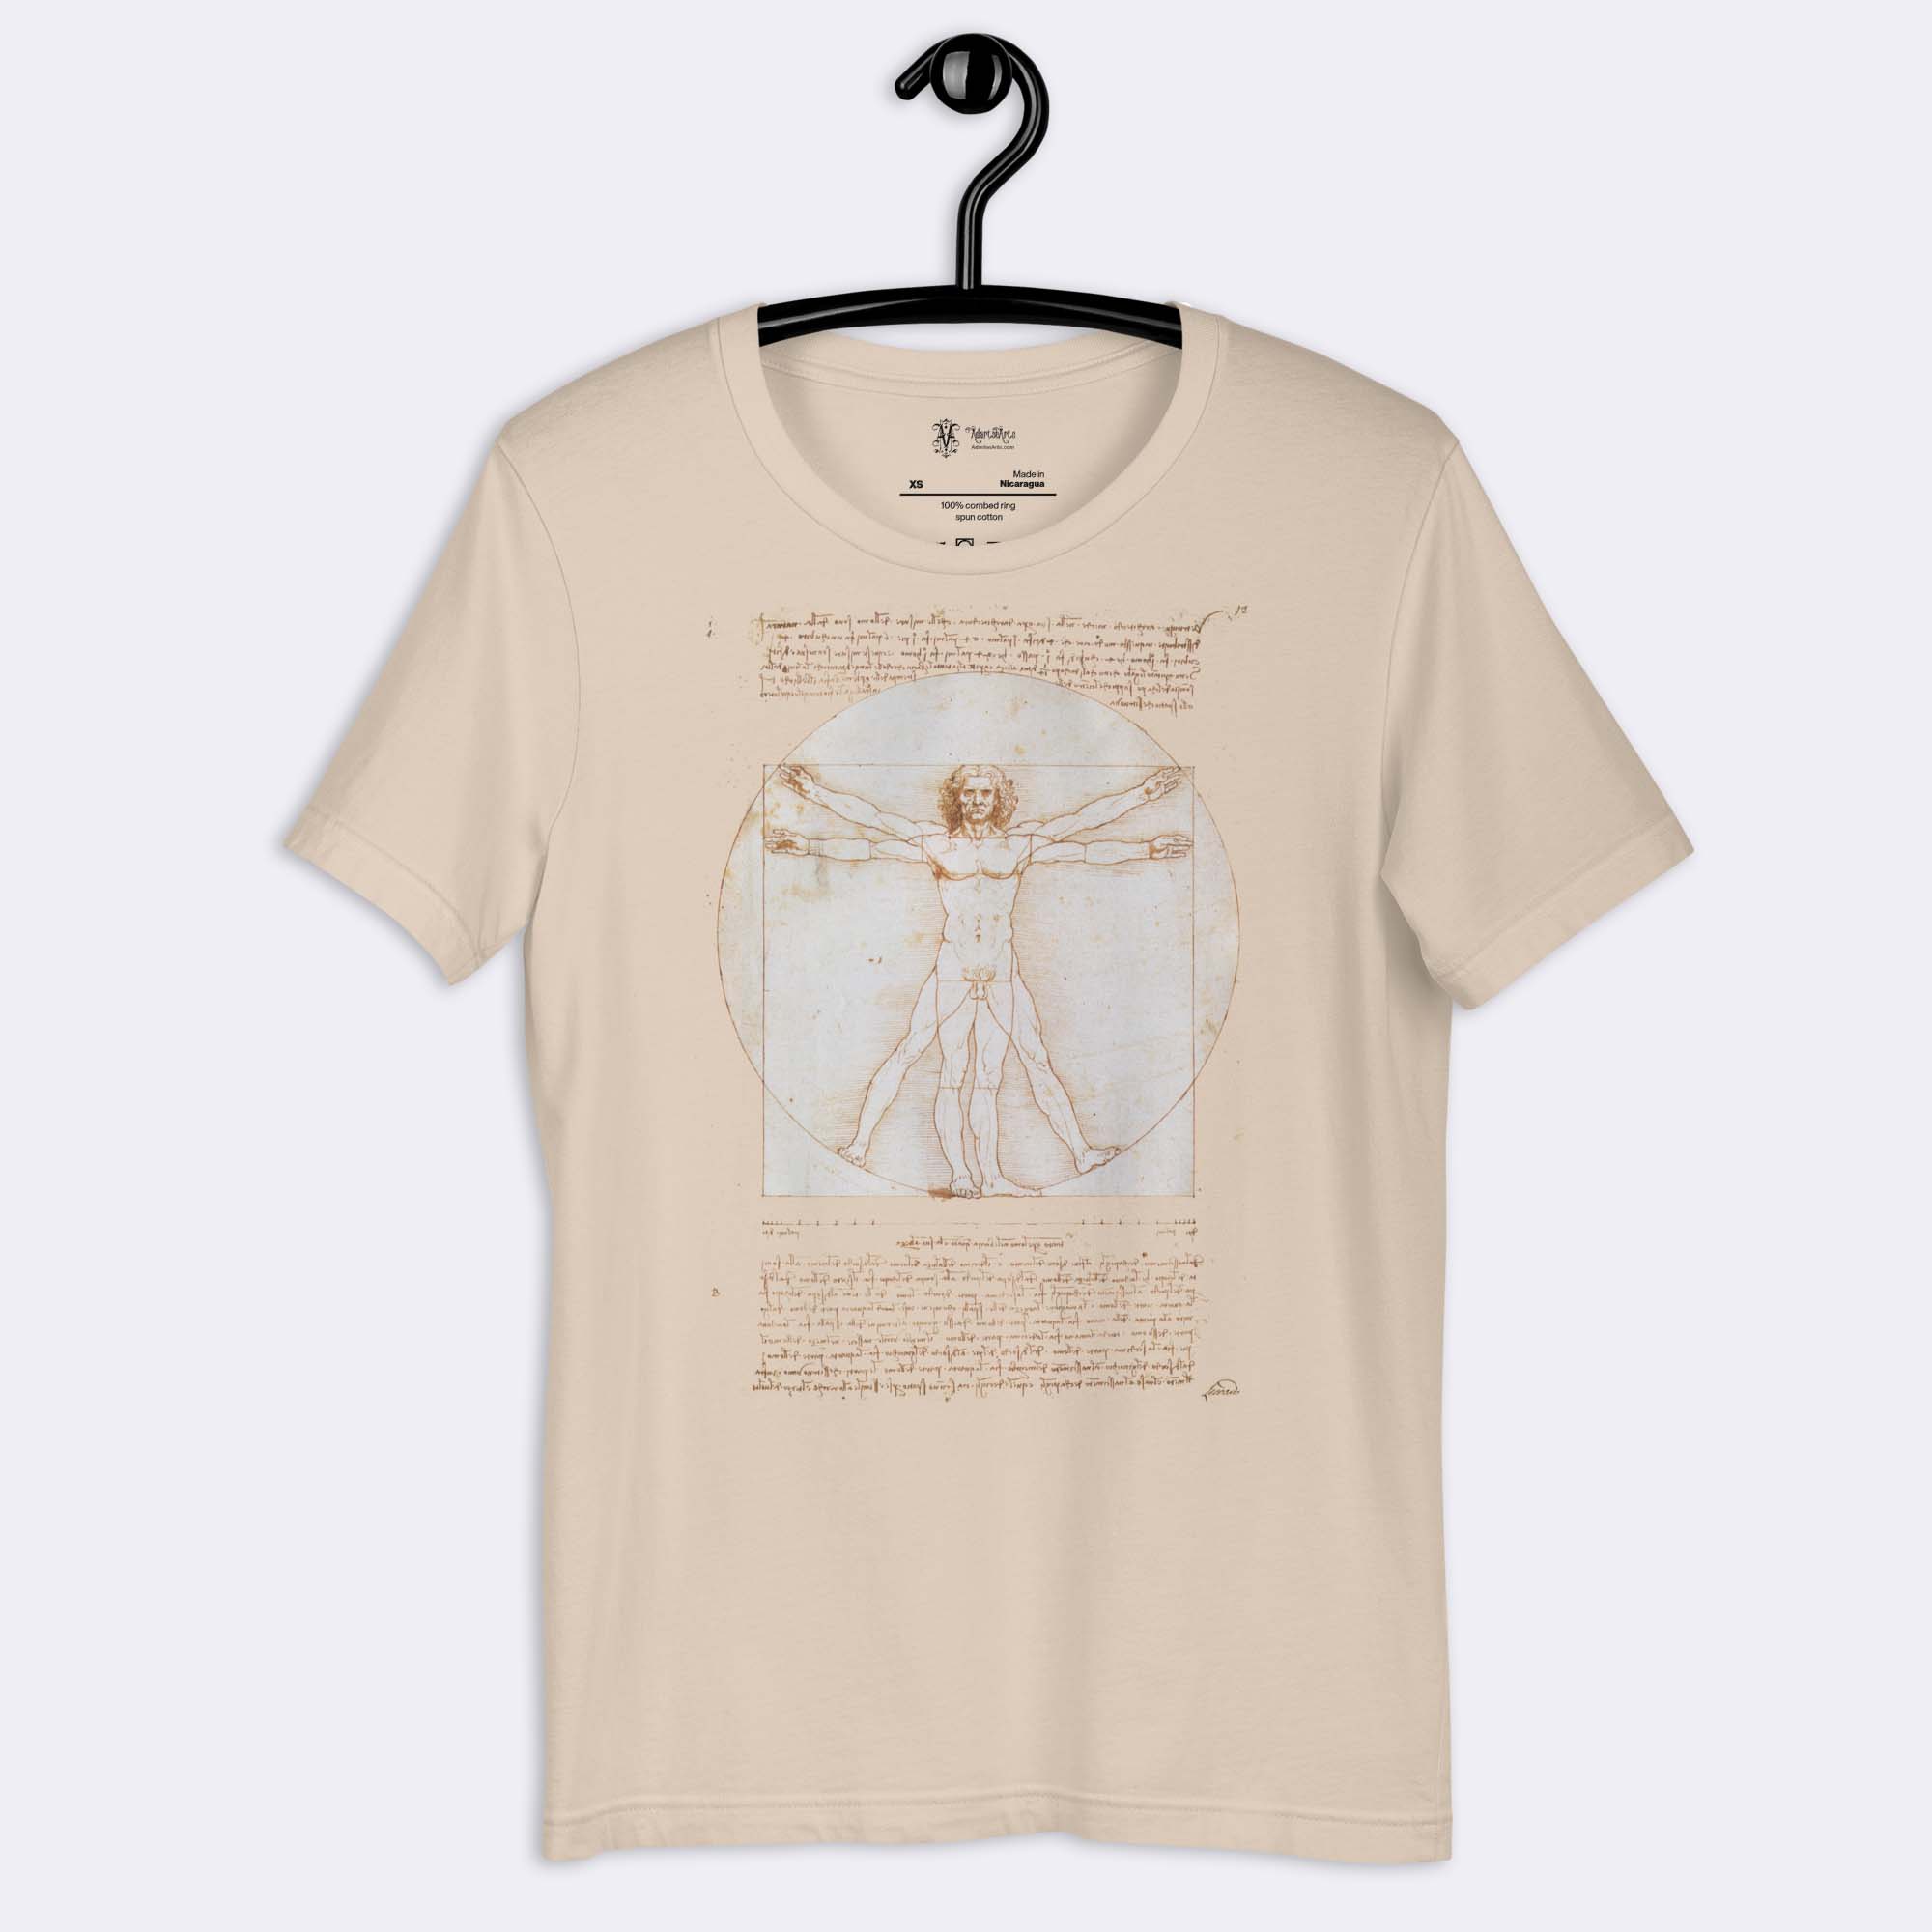 Premium Unisex Art T-Shirt of The Vitruvian Man (1492) by Leonardo Da Vinci.